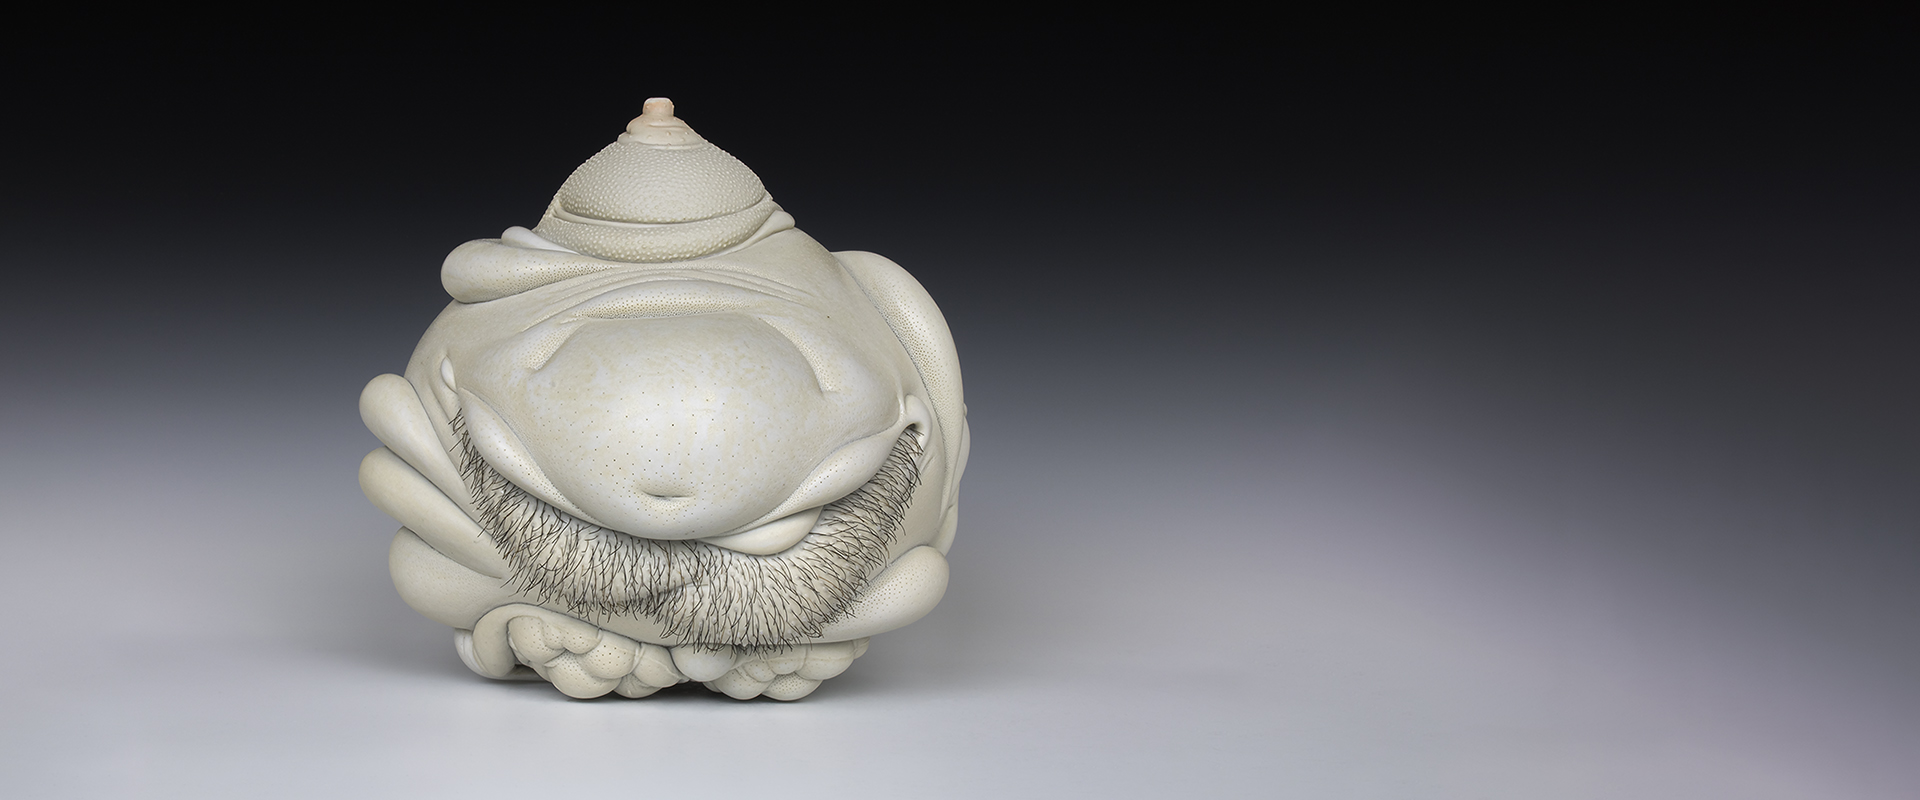 Jason Briggs "Royal". porcelain, hair, and mixed media sculpture ceramics.